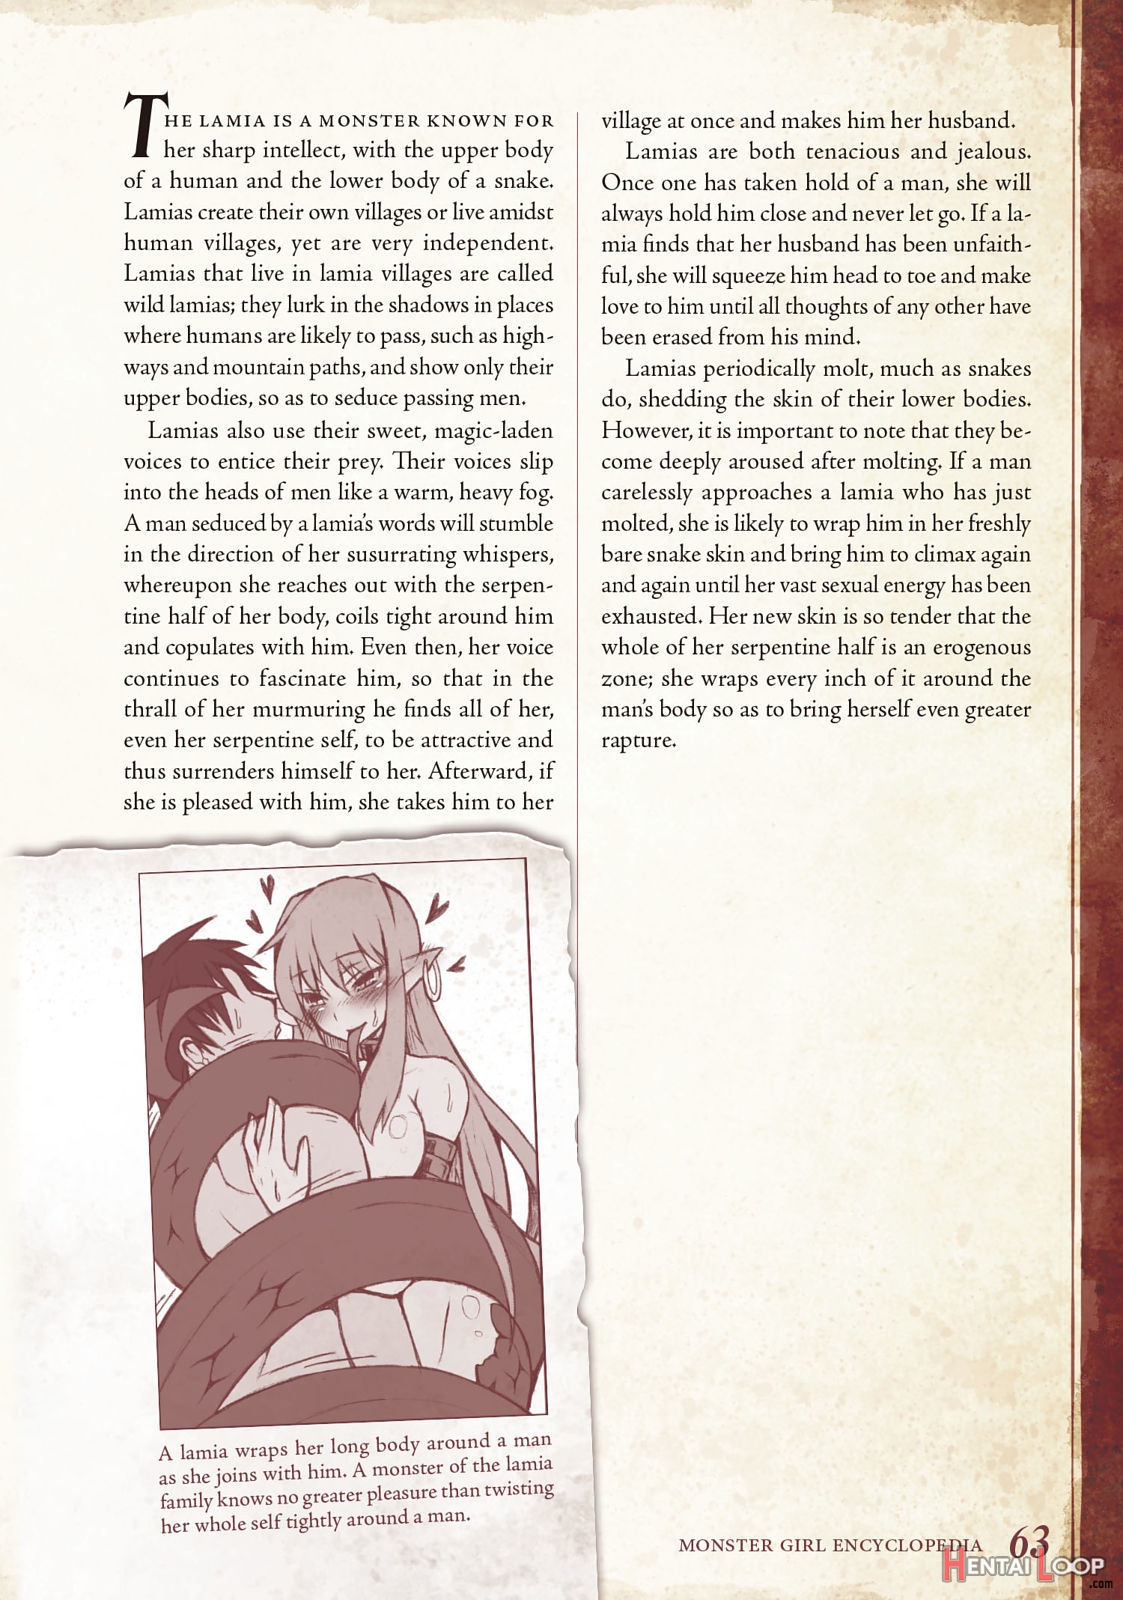 Monster Girl Encyclopedia Vol. 1 page 64